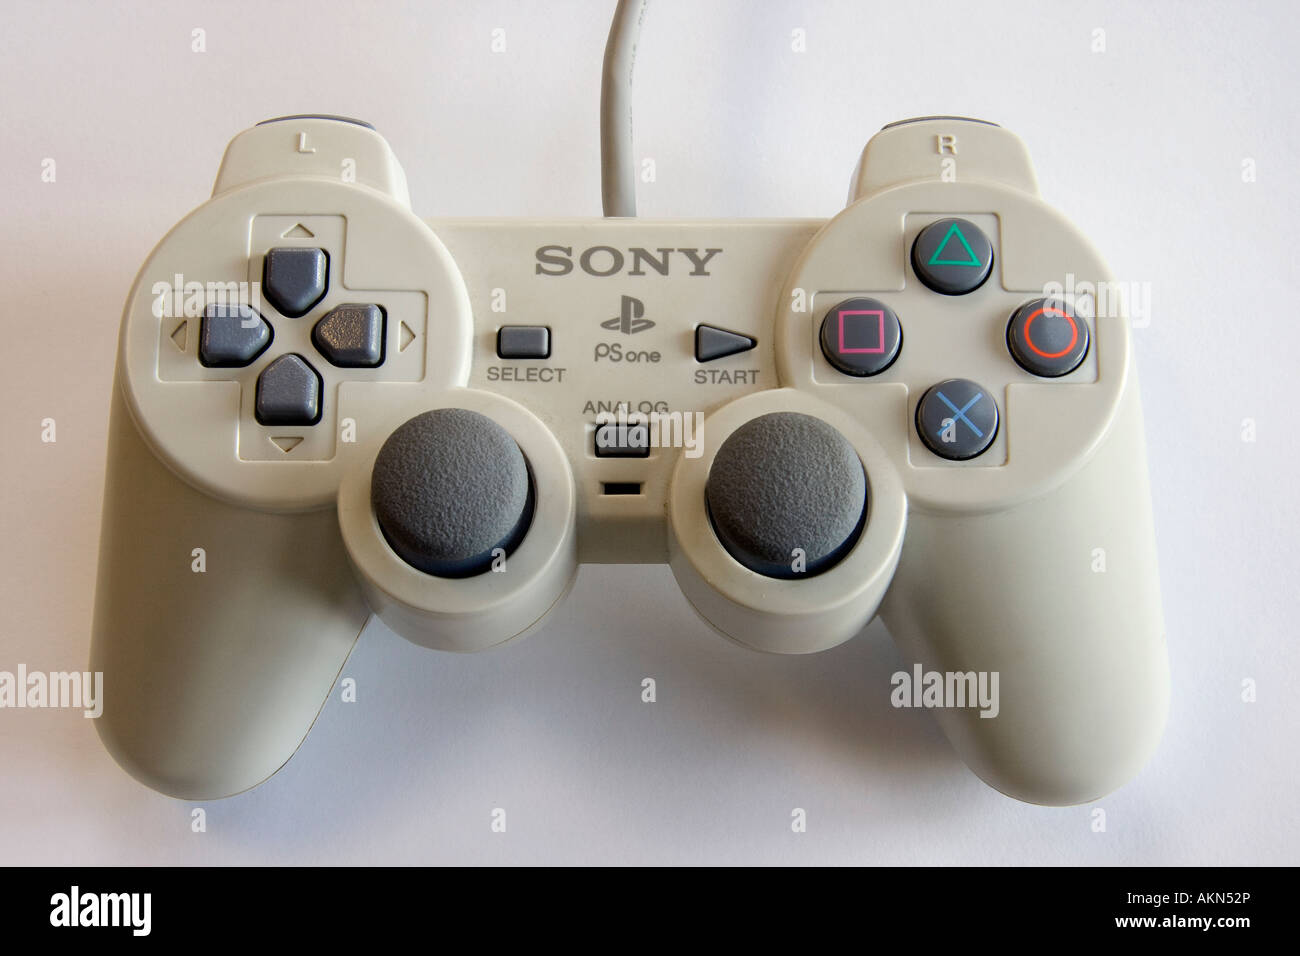 a Sony Playstation gaming pad Stock Photo